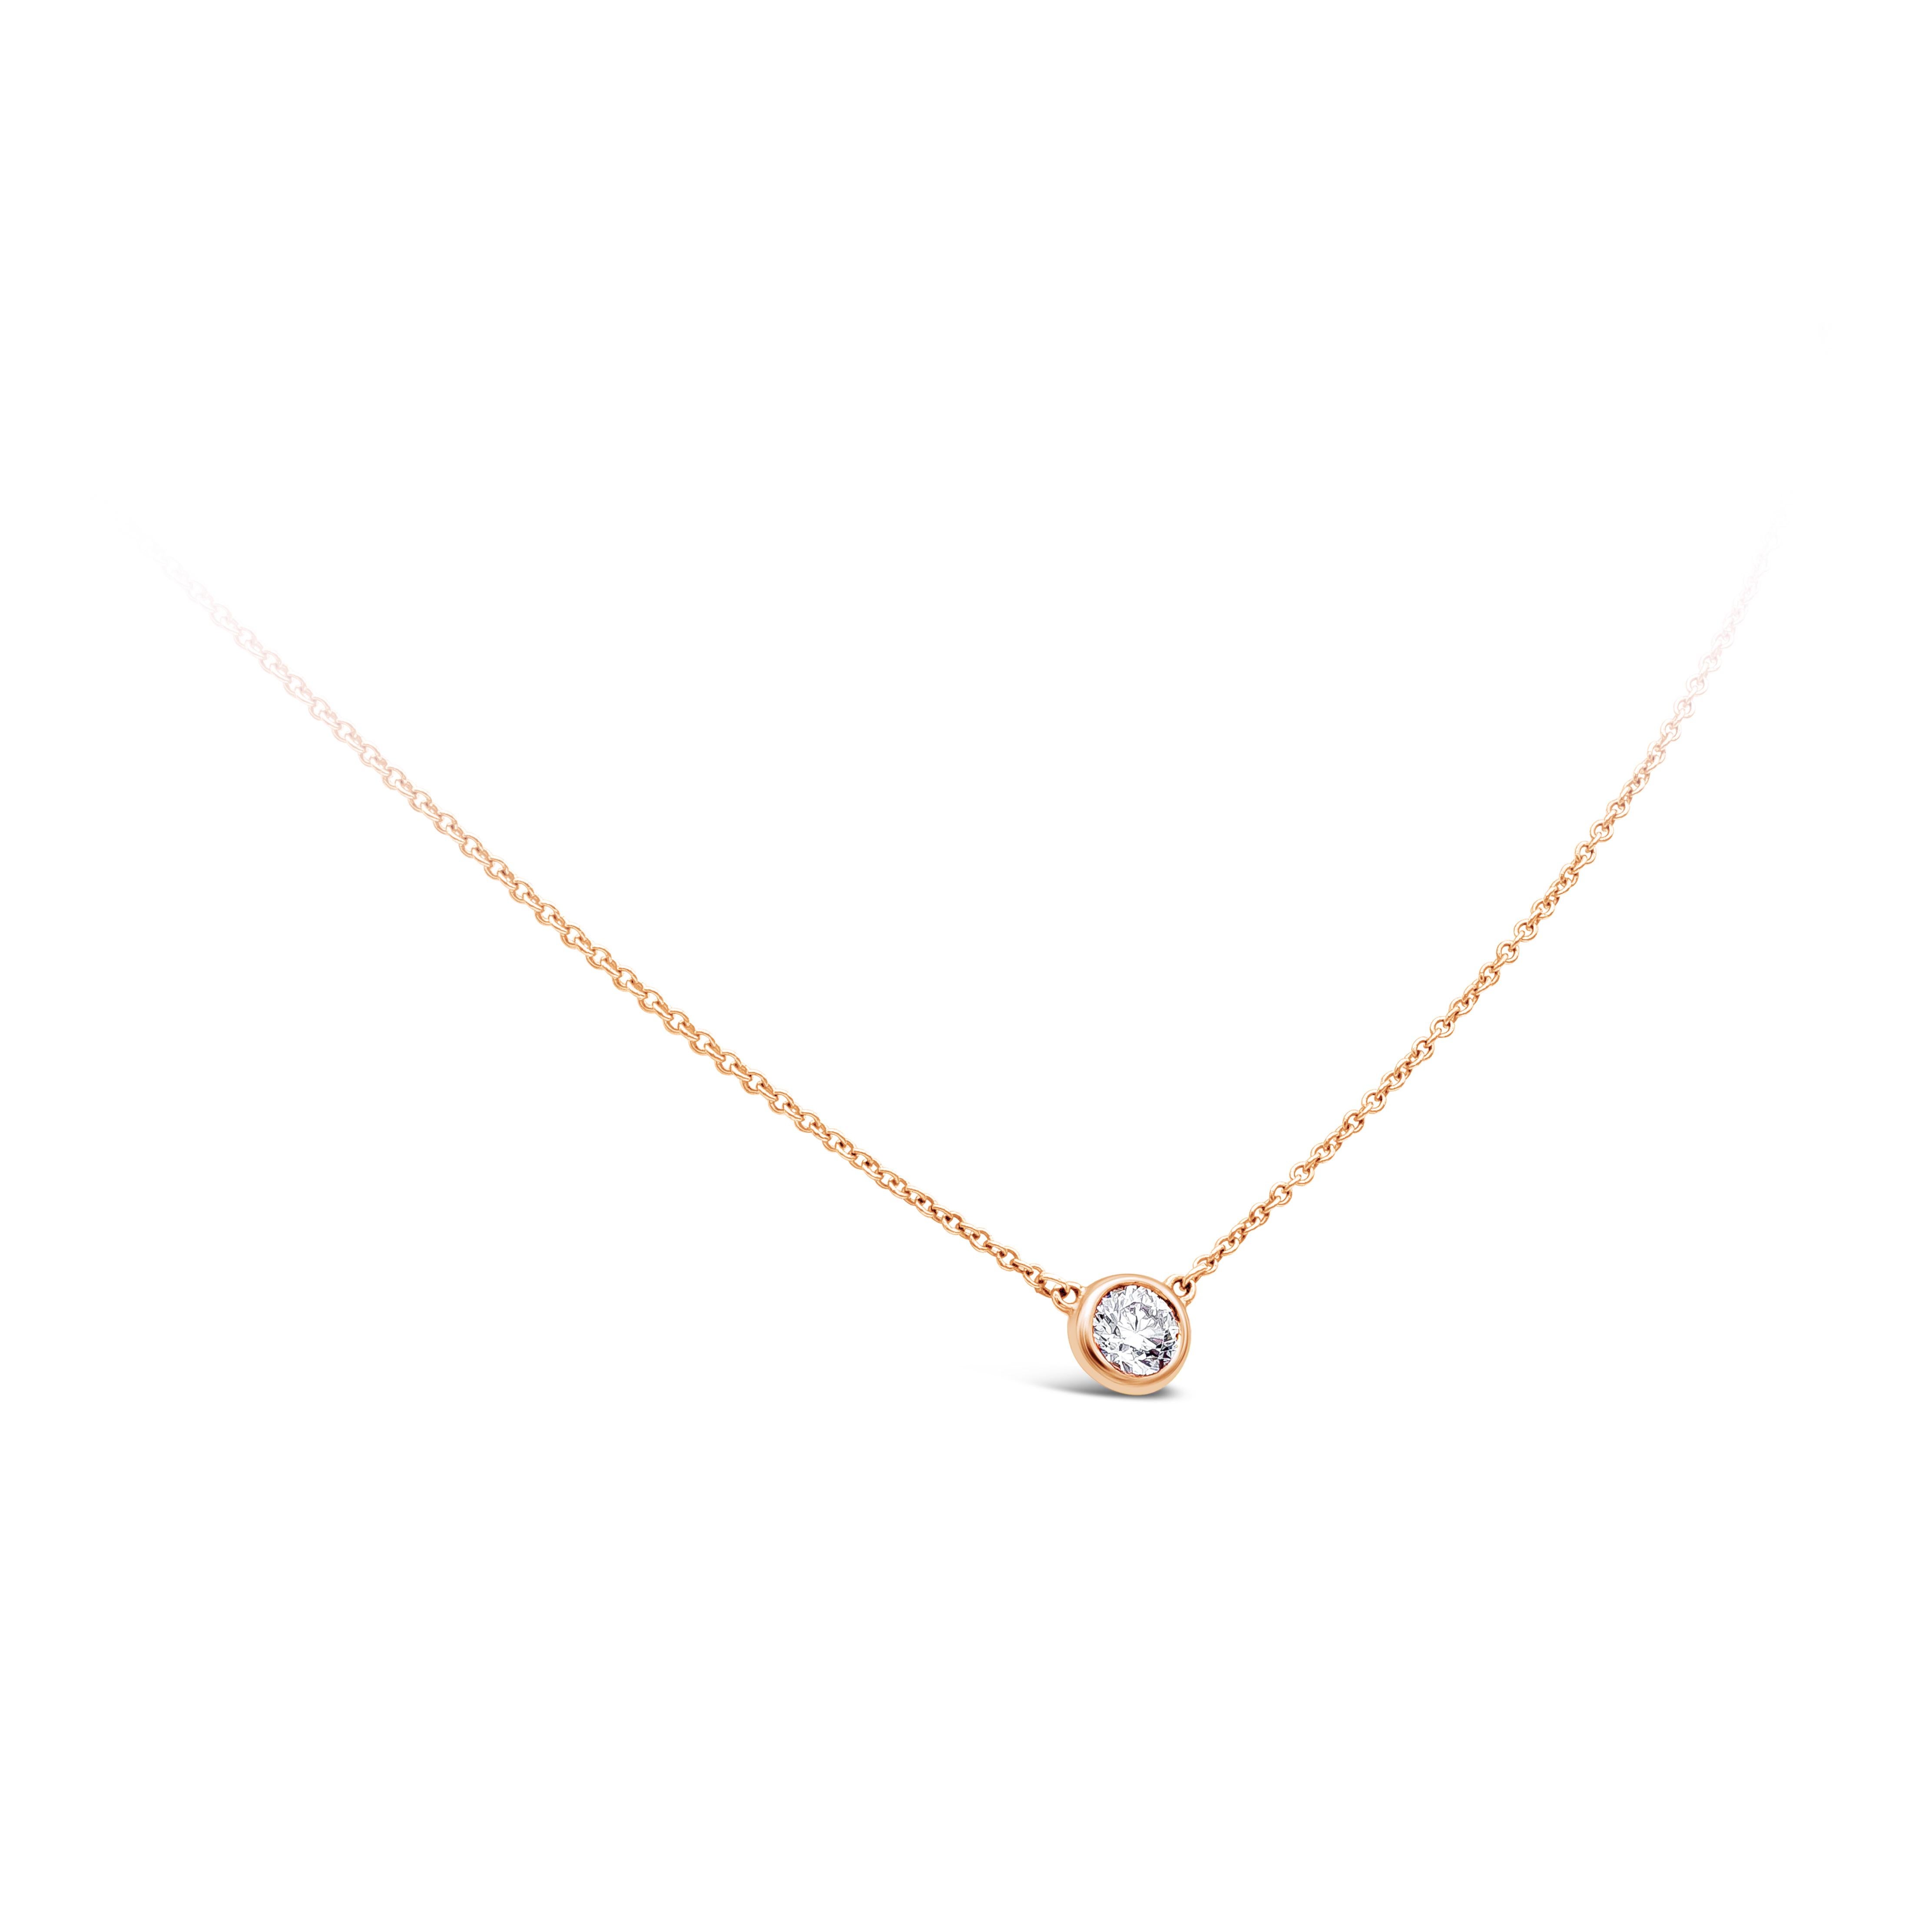 Moderne Roman Malakov, collier pendentif solitaire serti d'un diamant rond de 0,47 carat en vente